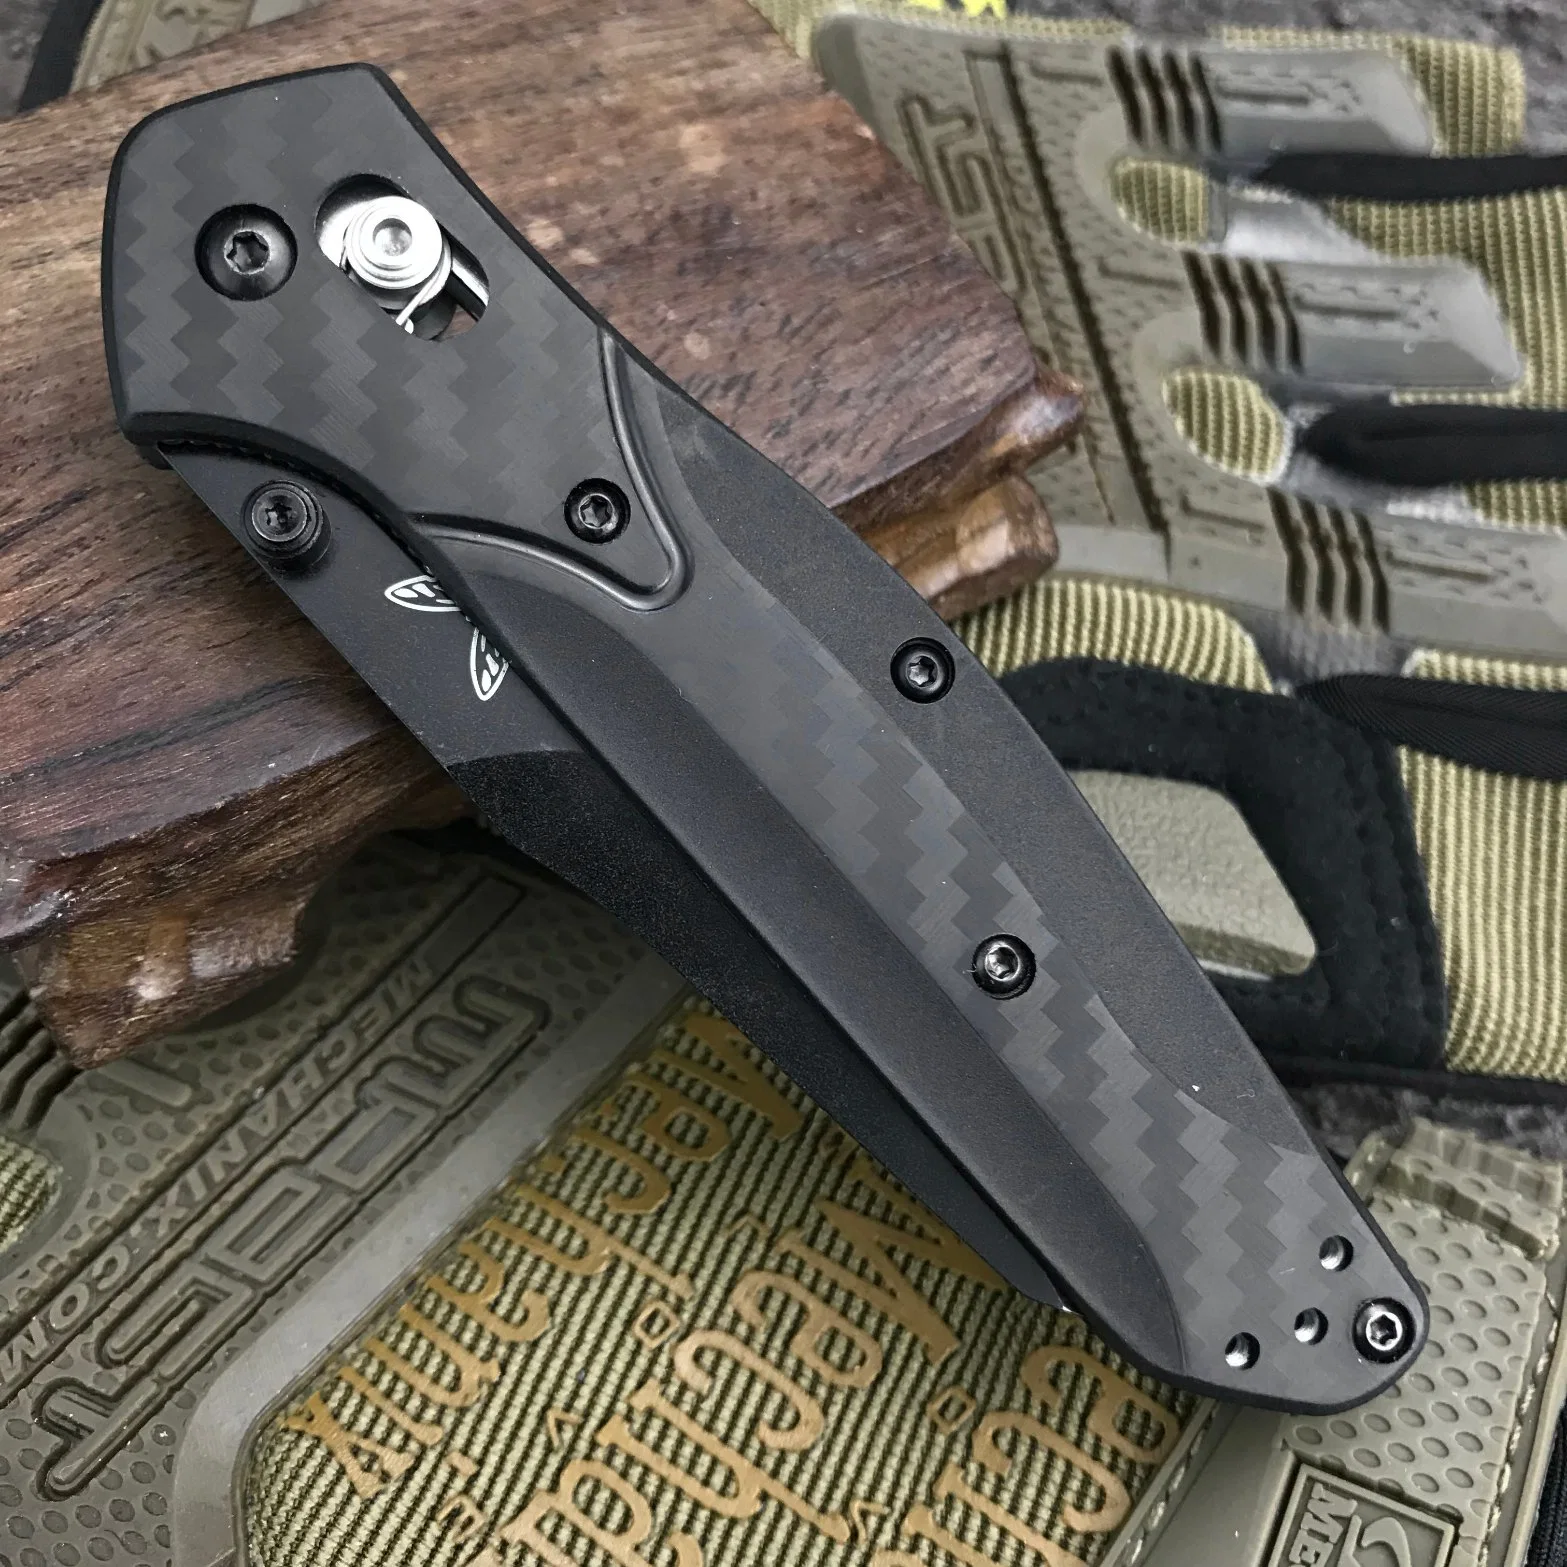 Benchmade Osborne 940 EDC Outdoor Tactical Camping Survival Knives with Black Carbon Fiber Handle Folding Pocket Knife